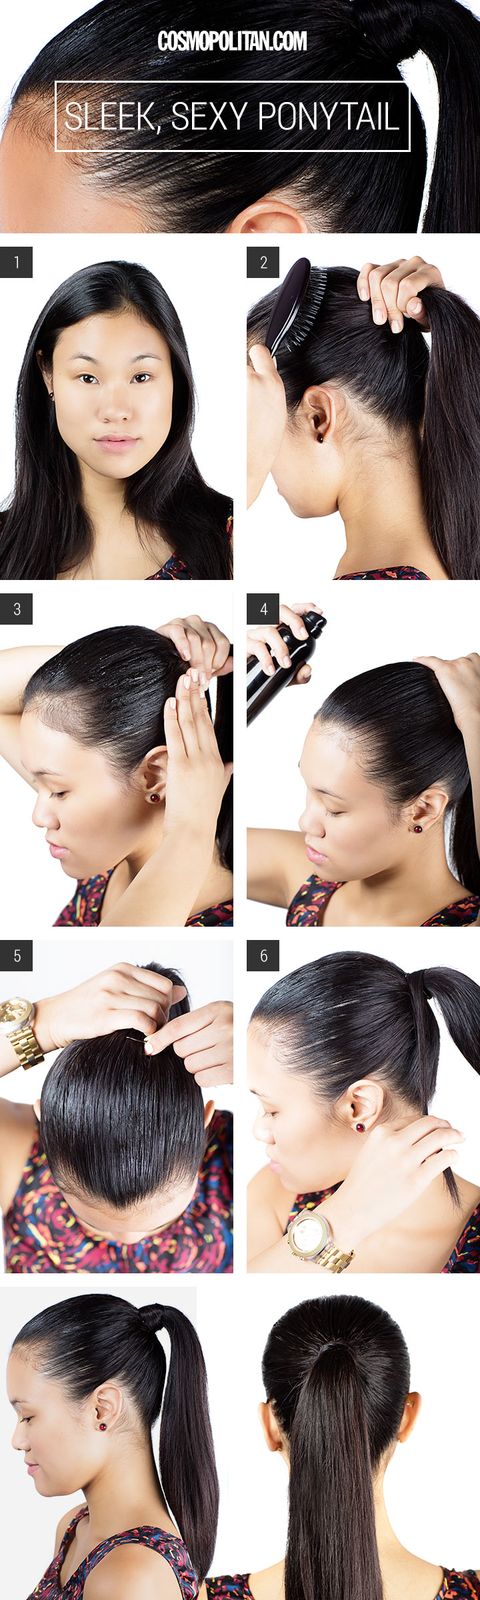 Sleek Ponytail Hair How To Slicked Back Ponytail Look